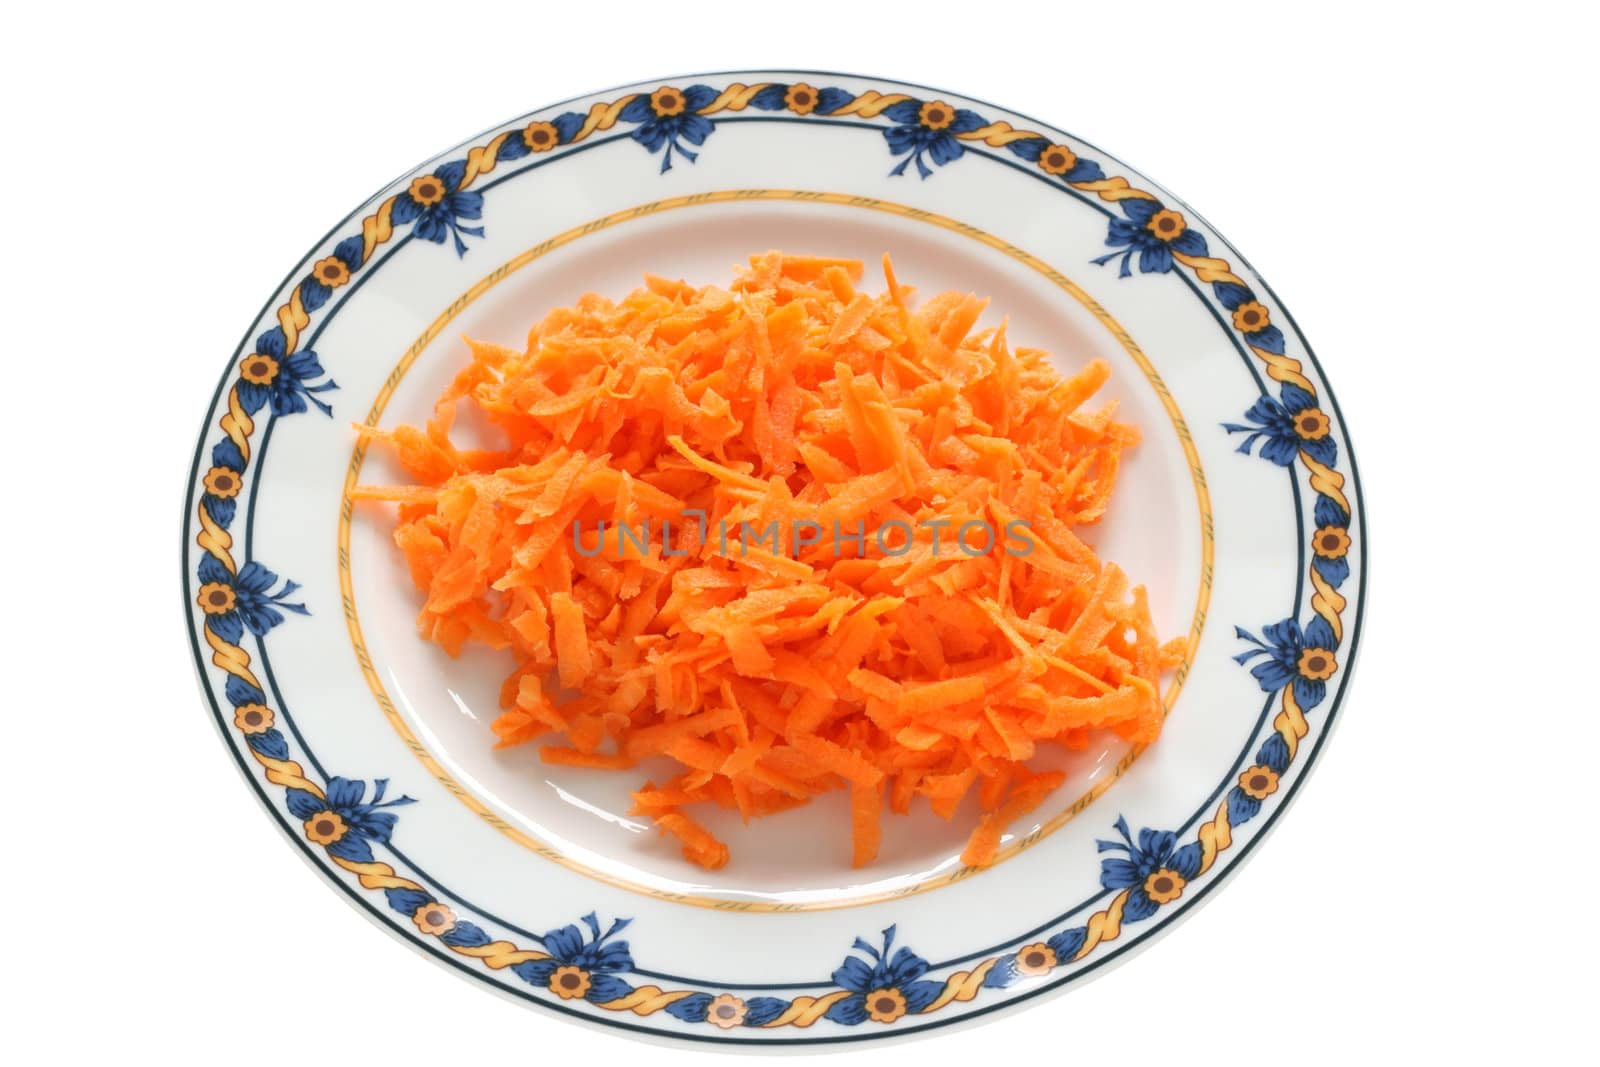 carrot salad on plate by nataliamylova